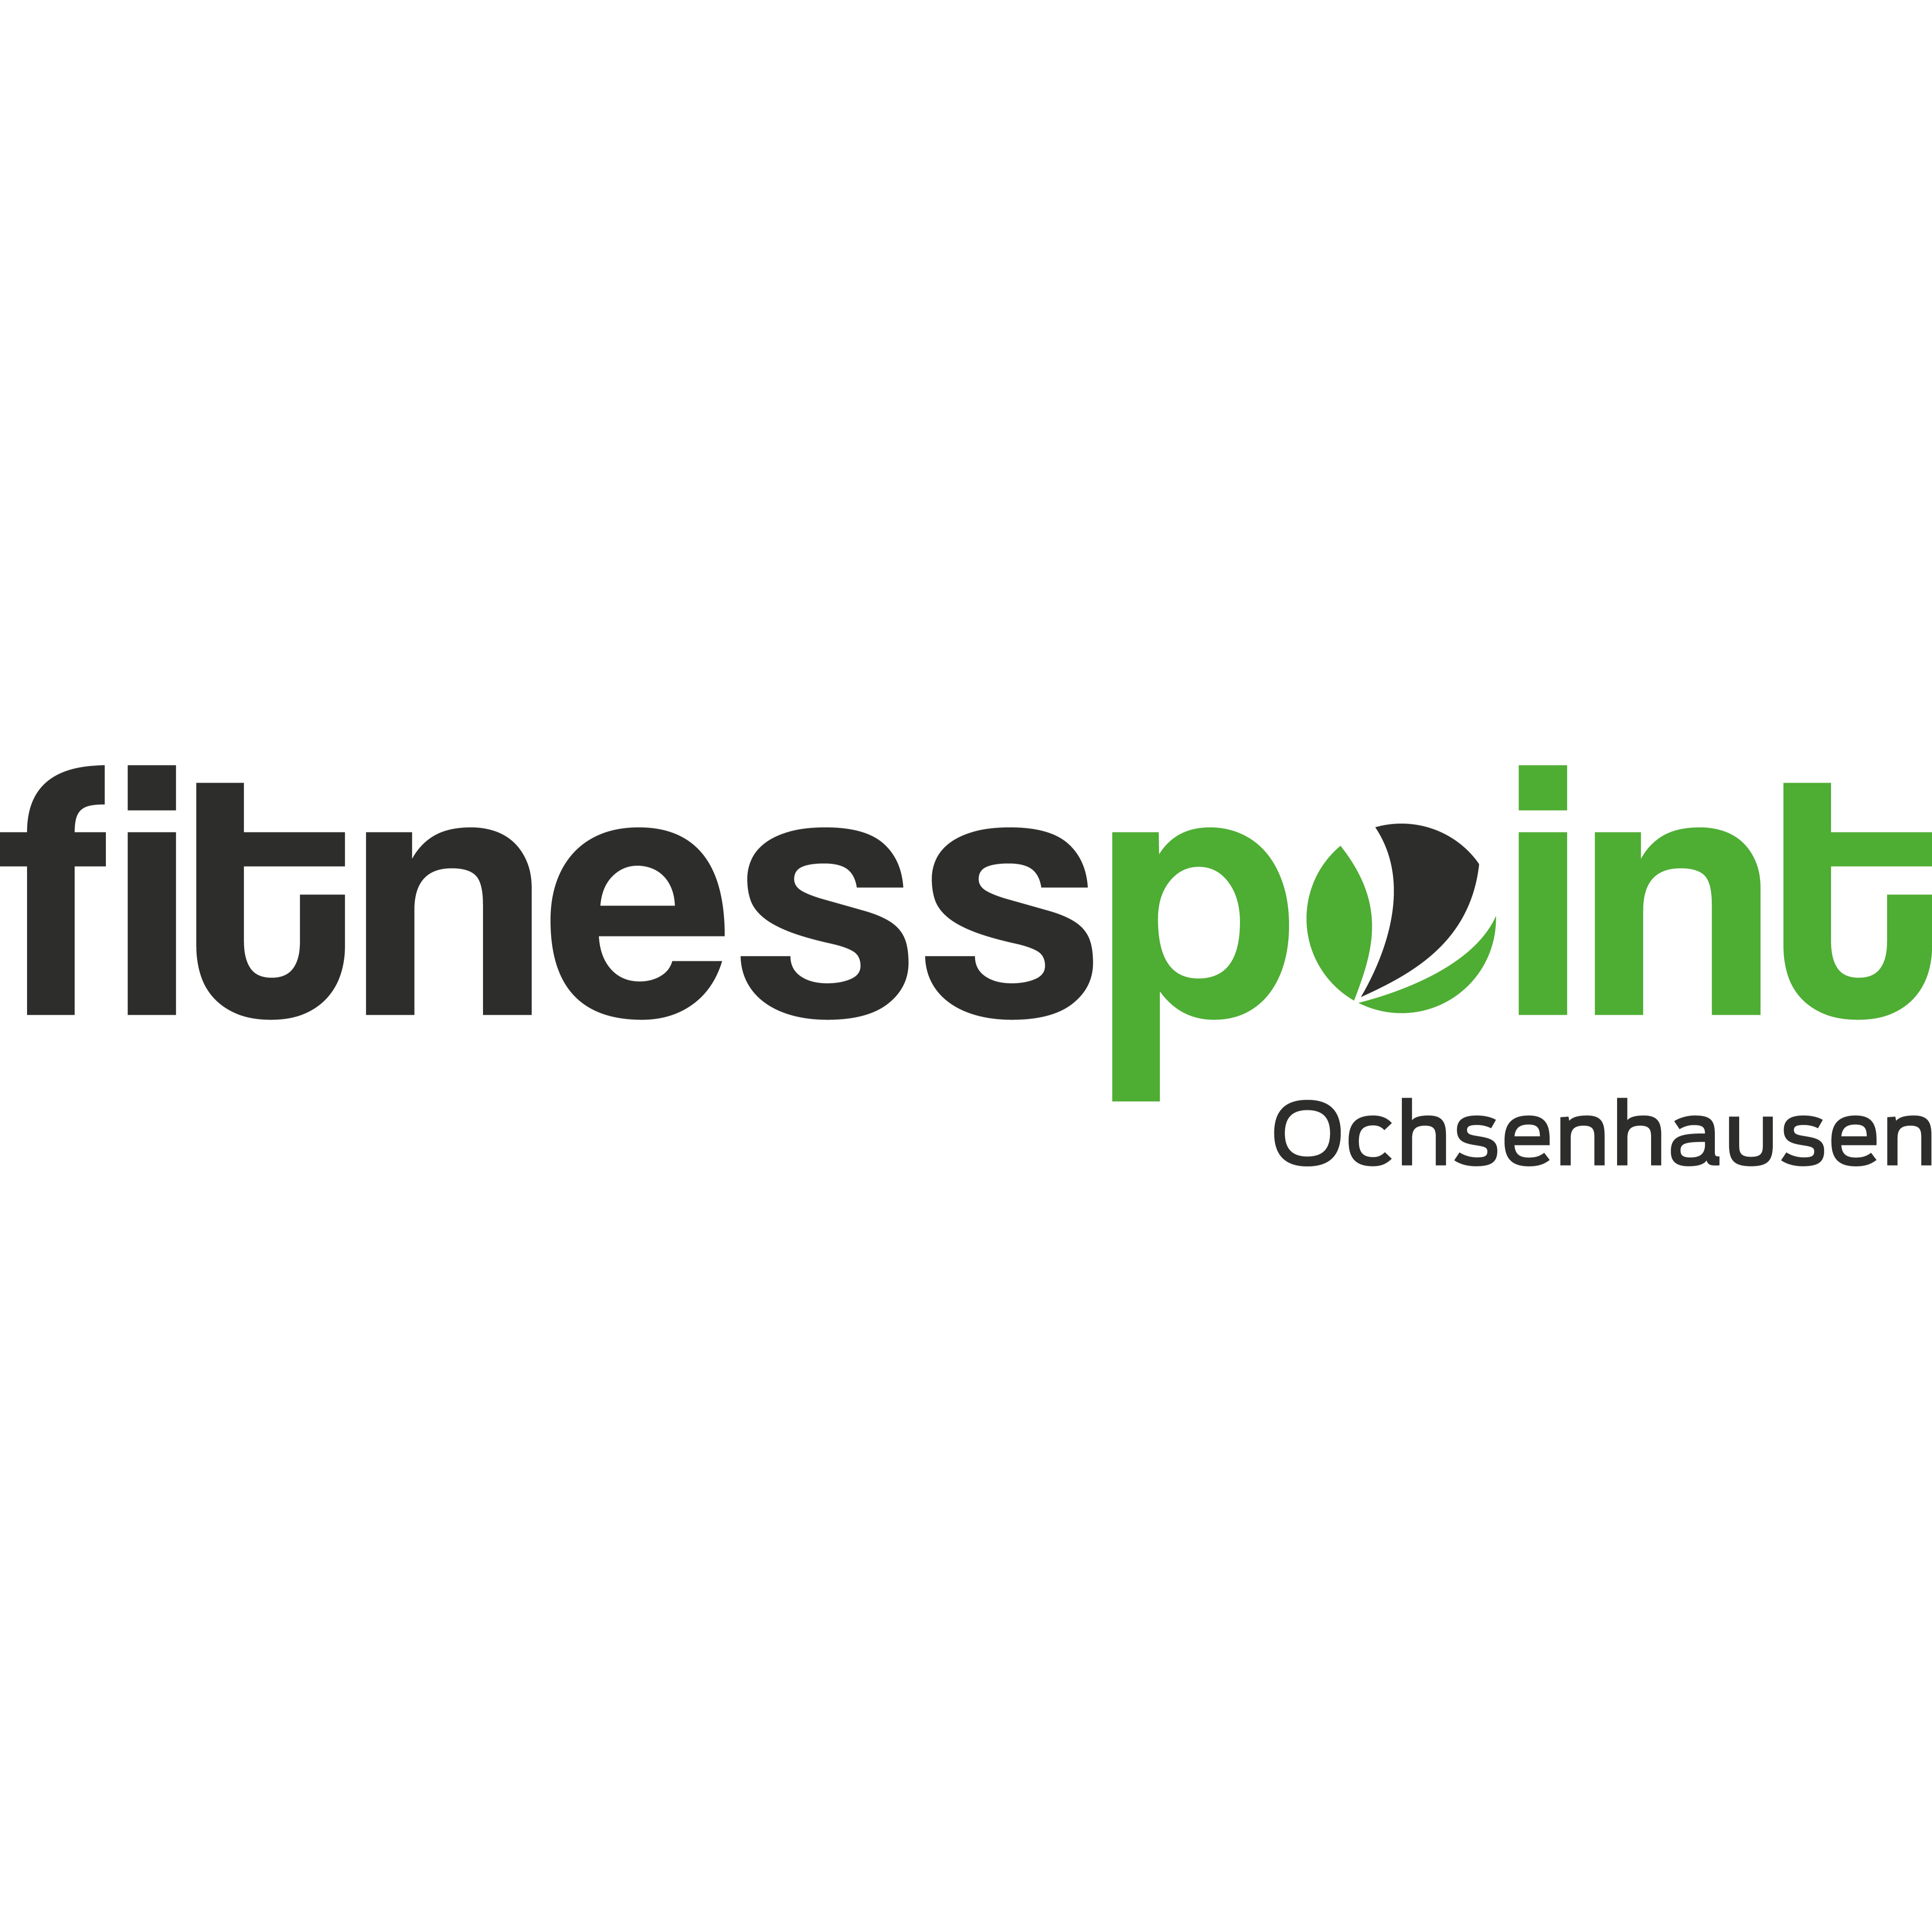 Fitnesspoint Ochsenhausen Logo